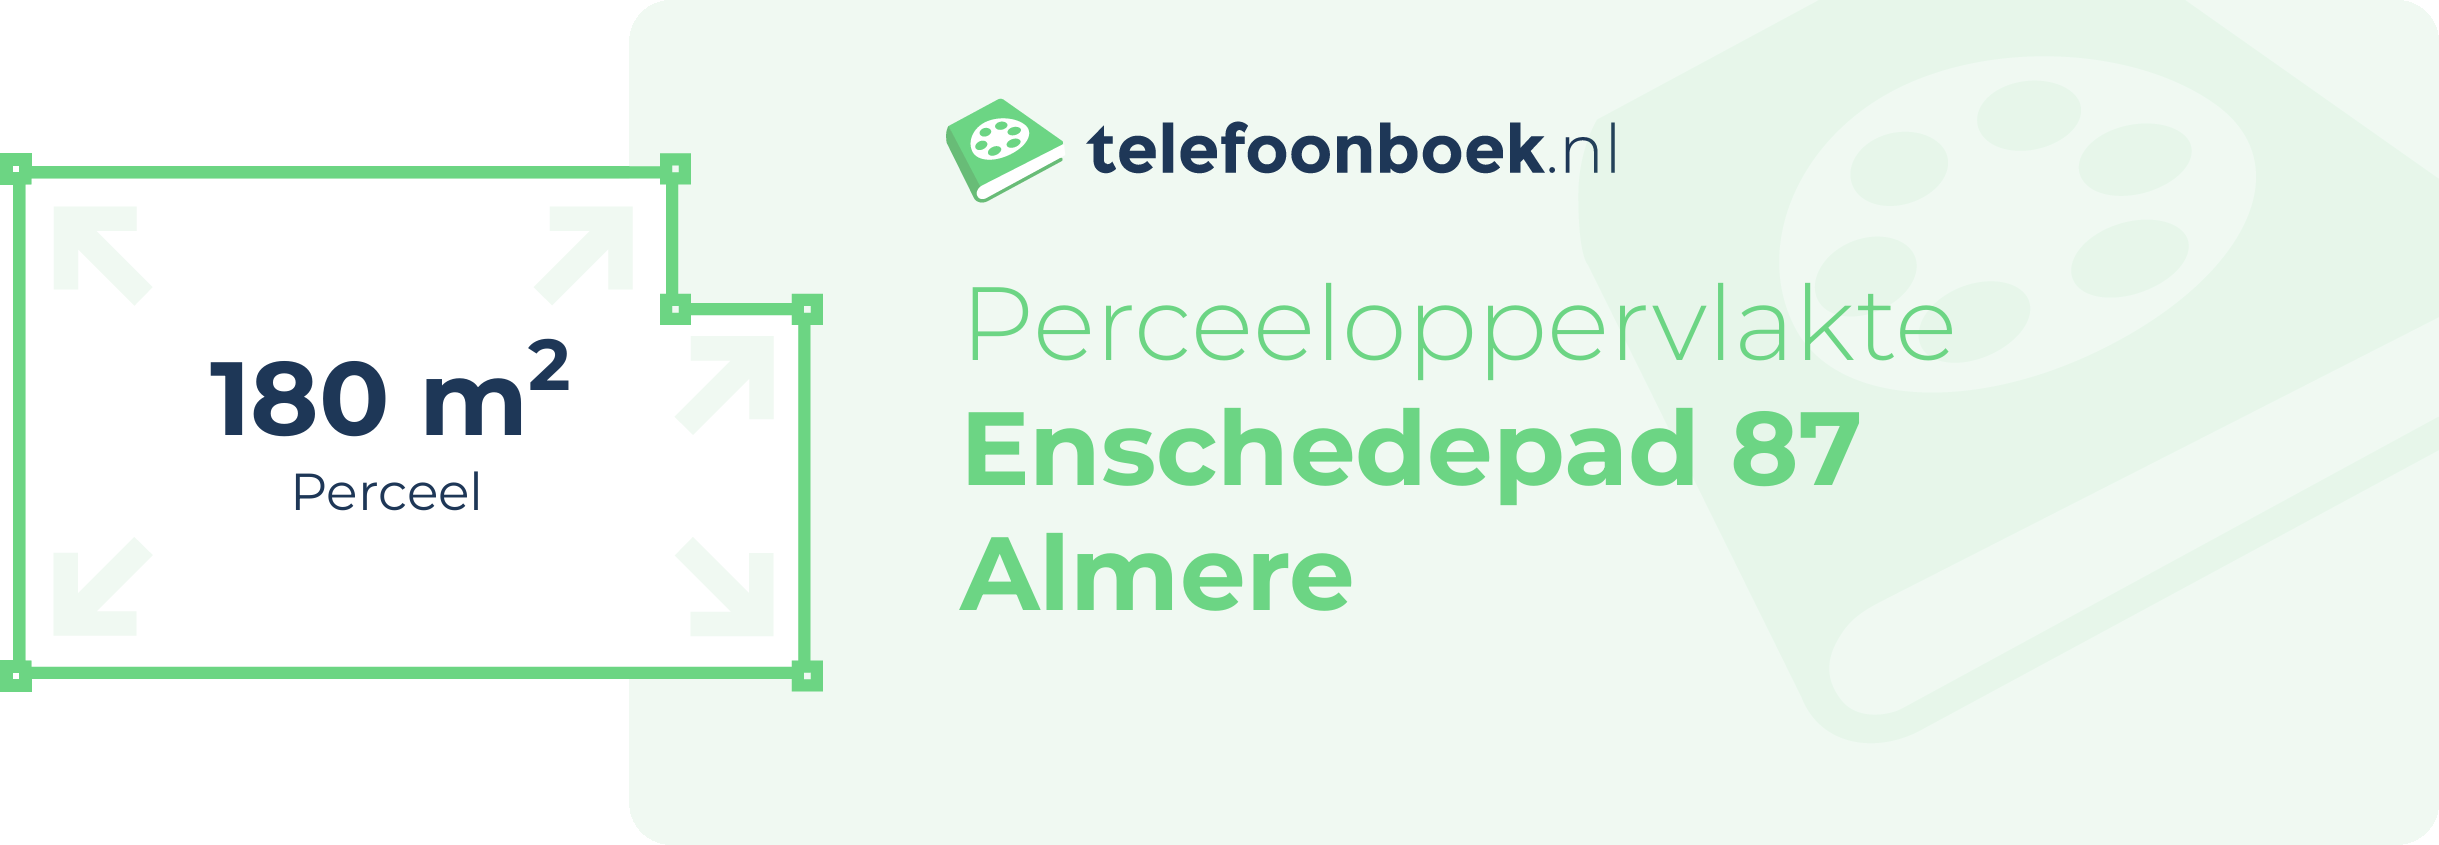 Perceeloppervlakte Enschedepad 87 Almere